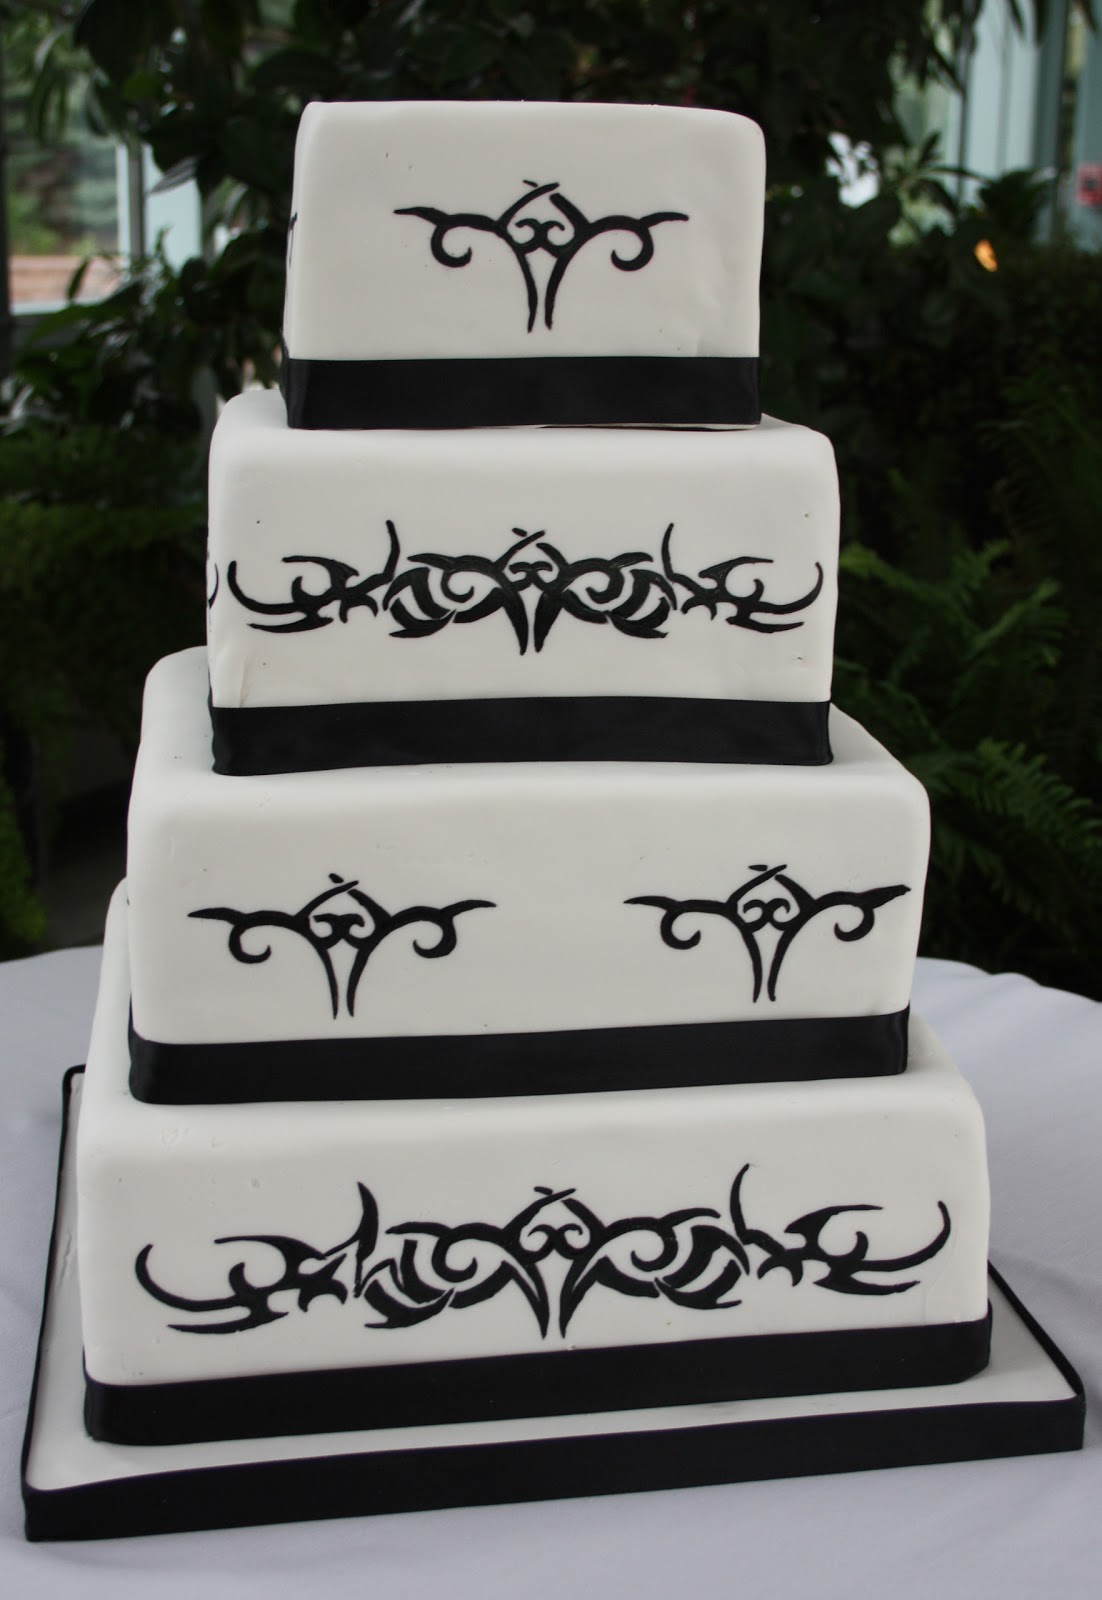 ck and white wedding cake